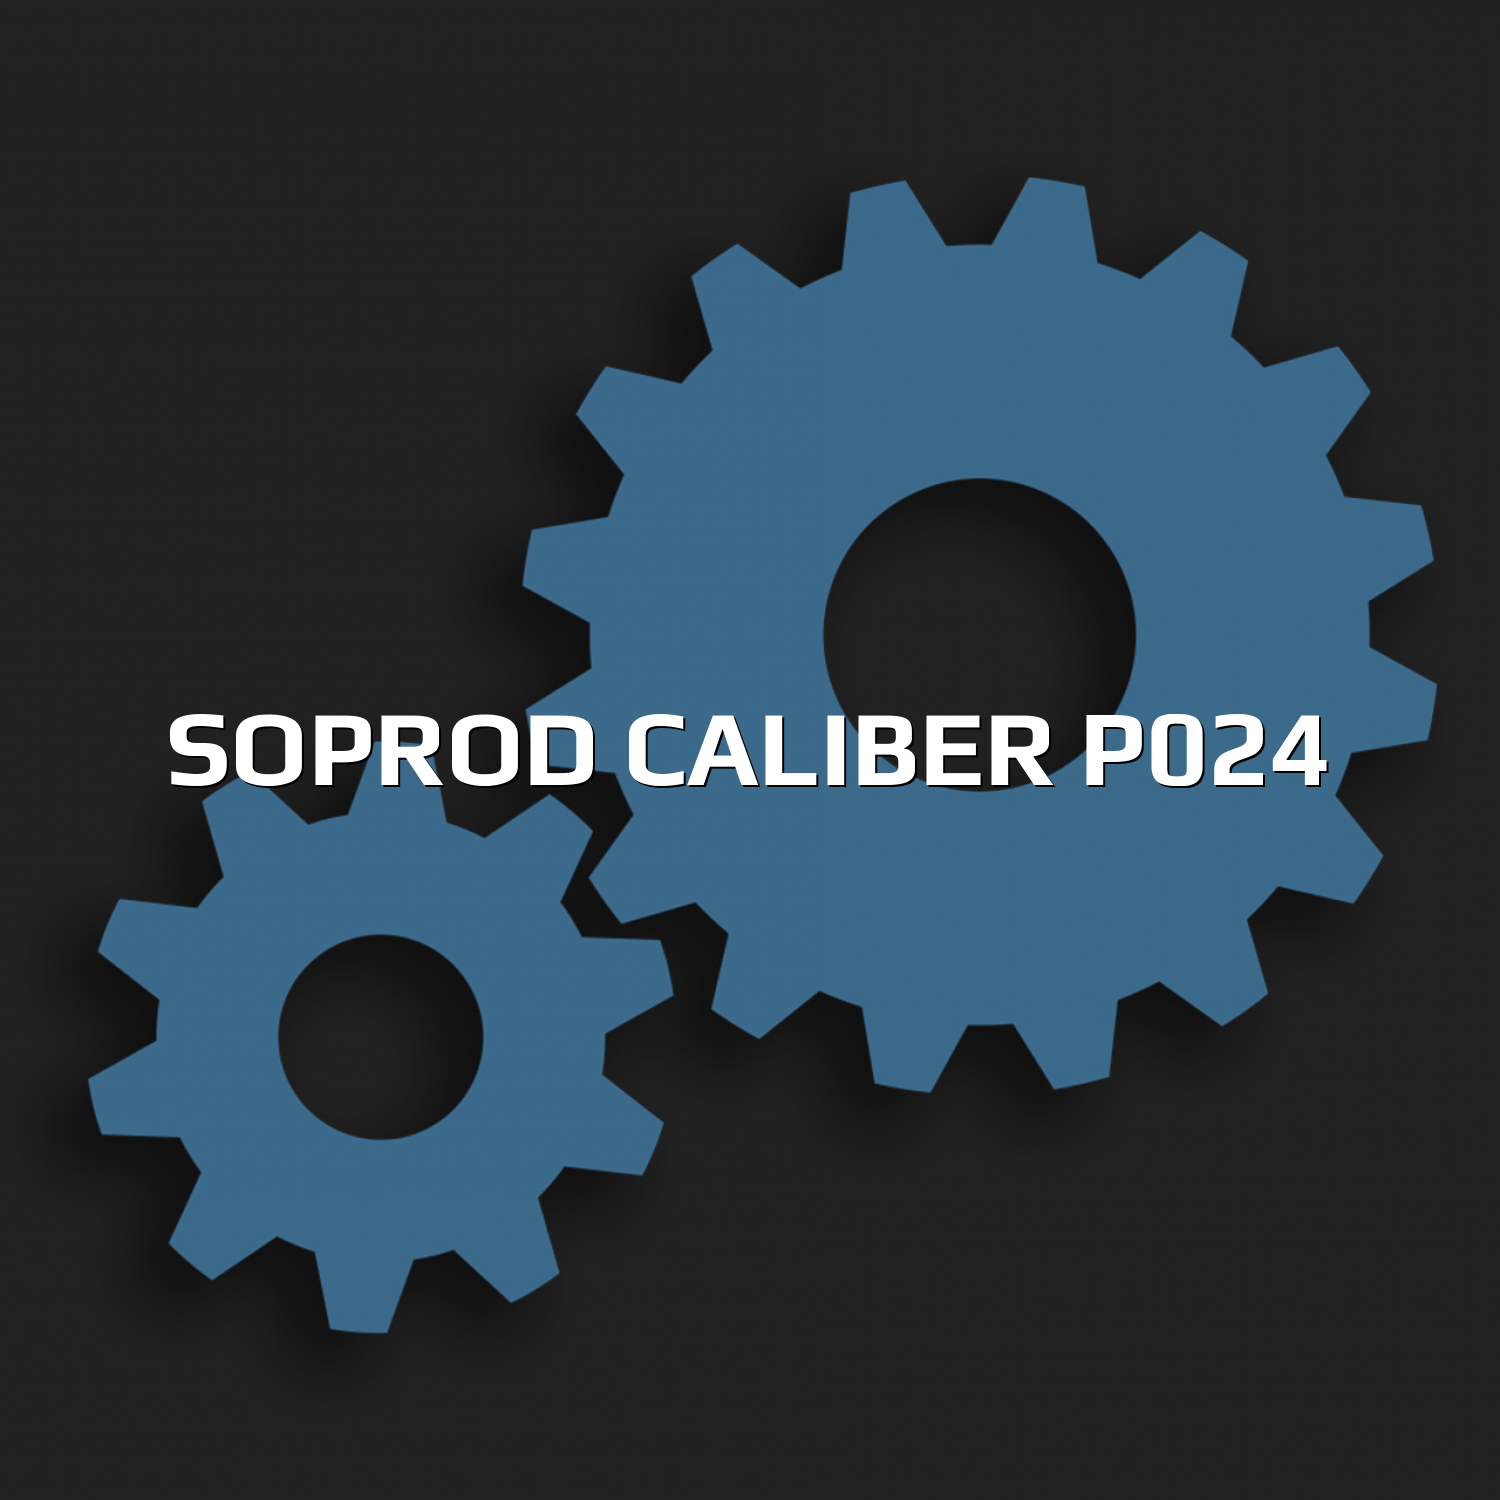 Soprod Caliber P024